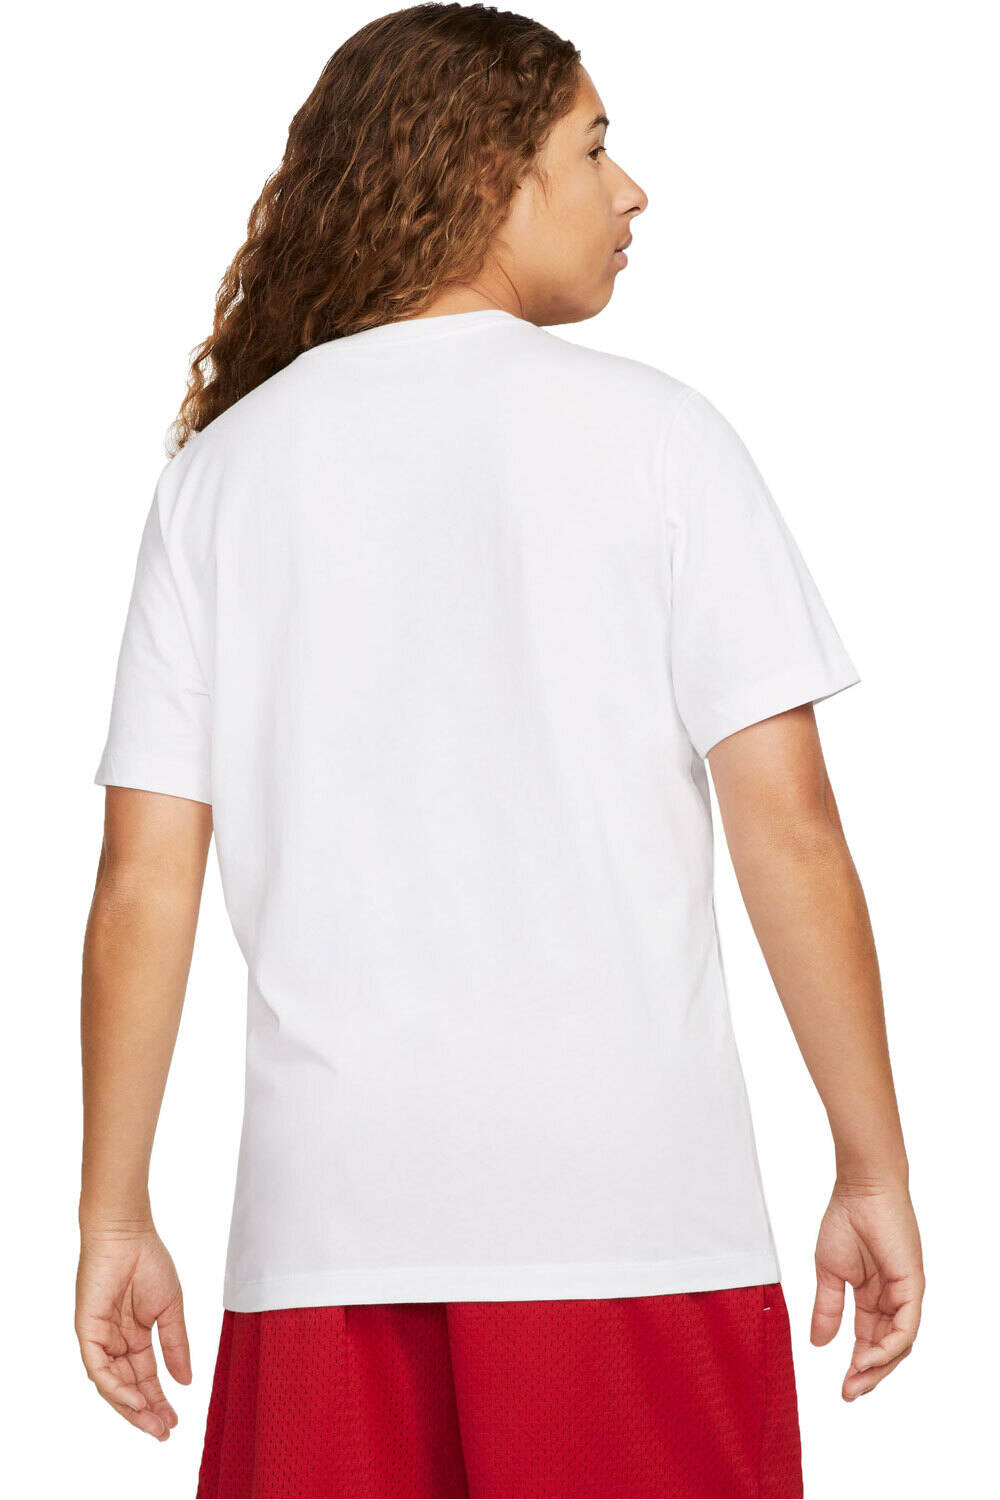 Nike camiseta manga corta hombre M NSW TEE FUTURA 2 vista trasera